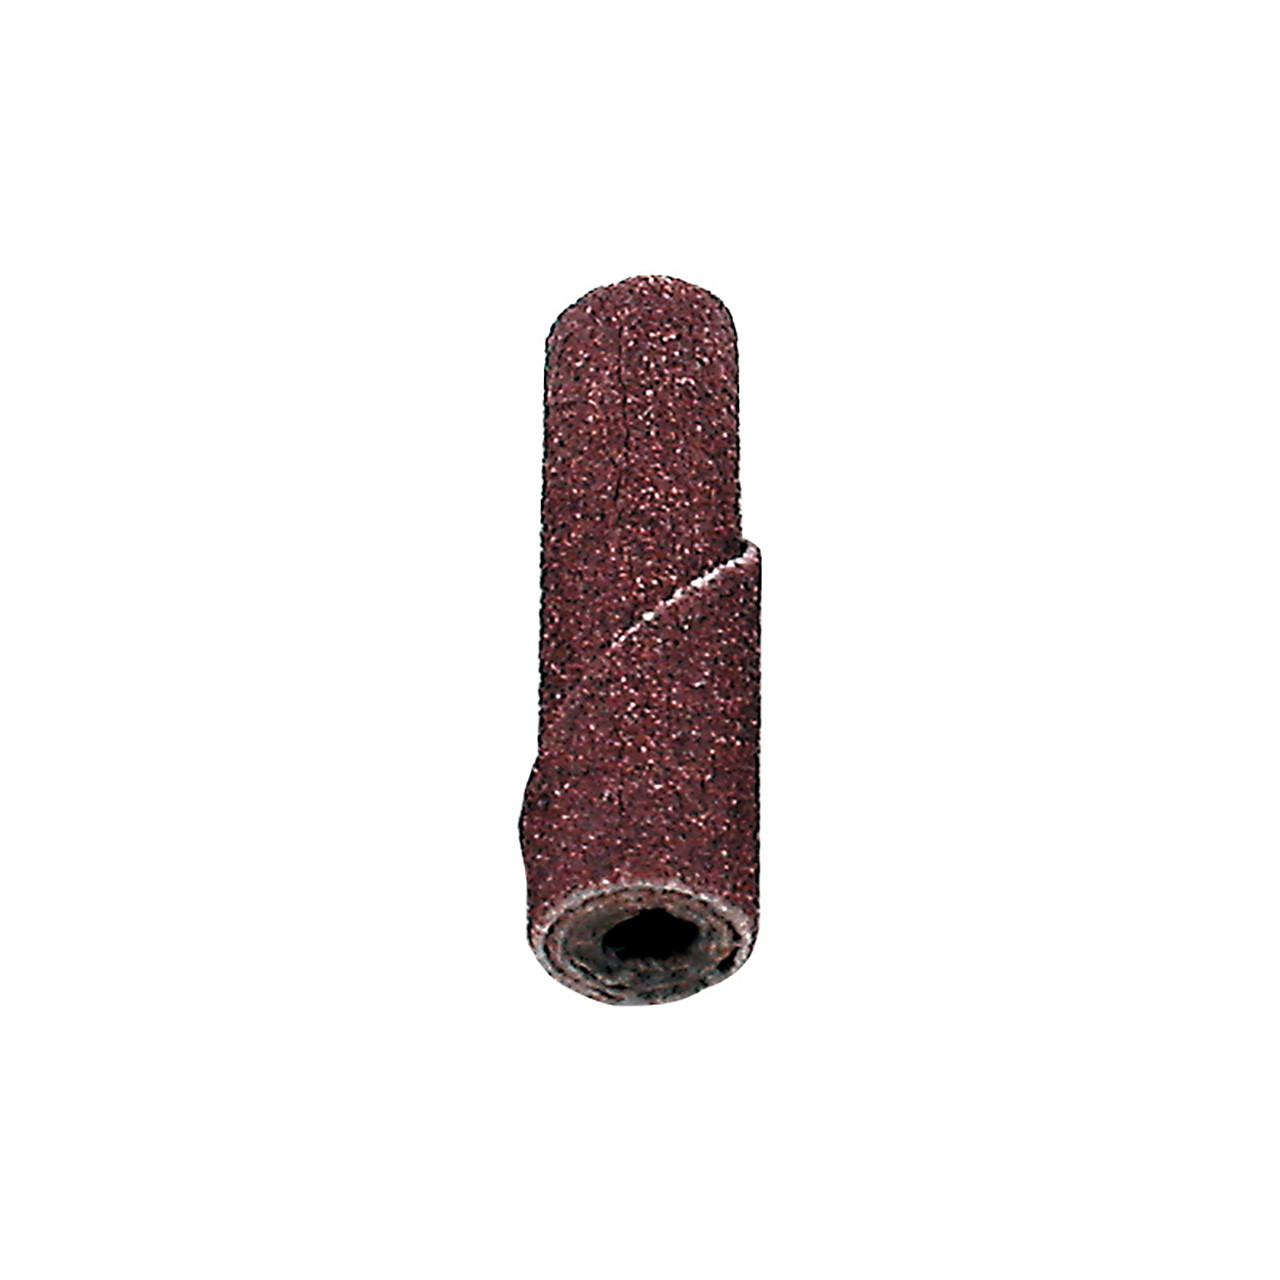 Abrasive Cartridge Rolls - 1/4" x 1" x 1/8", 120 Grit